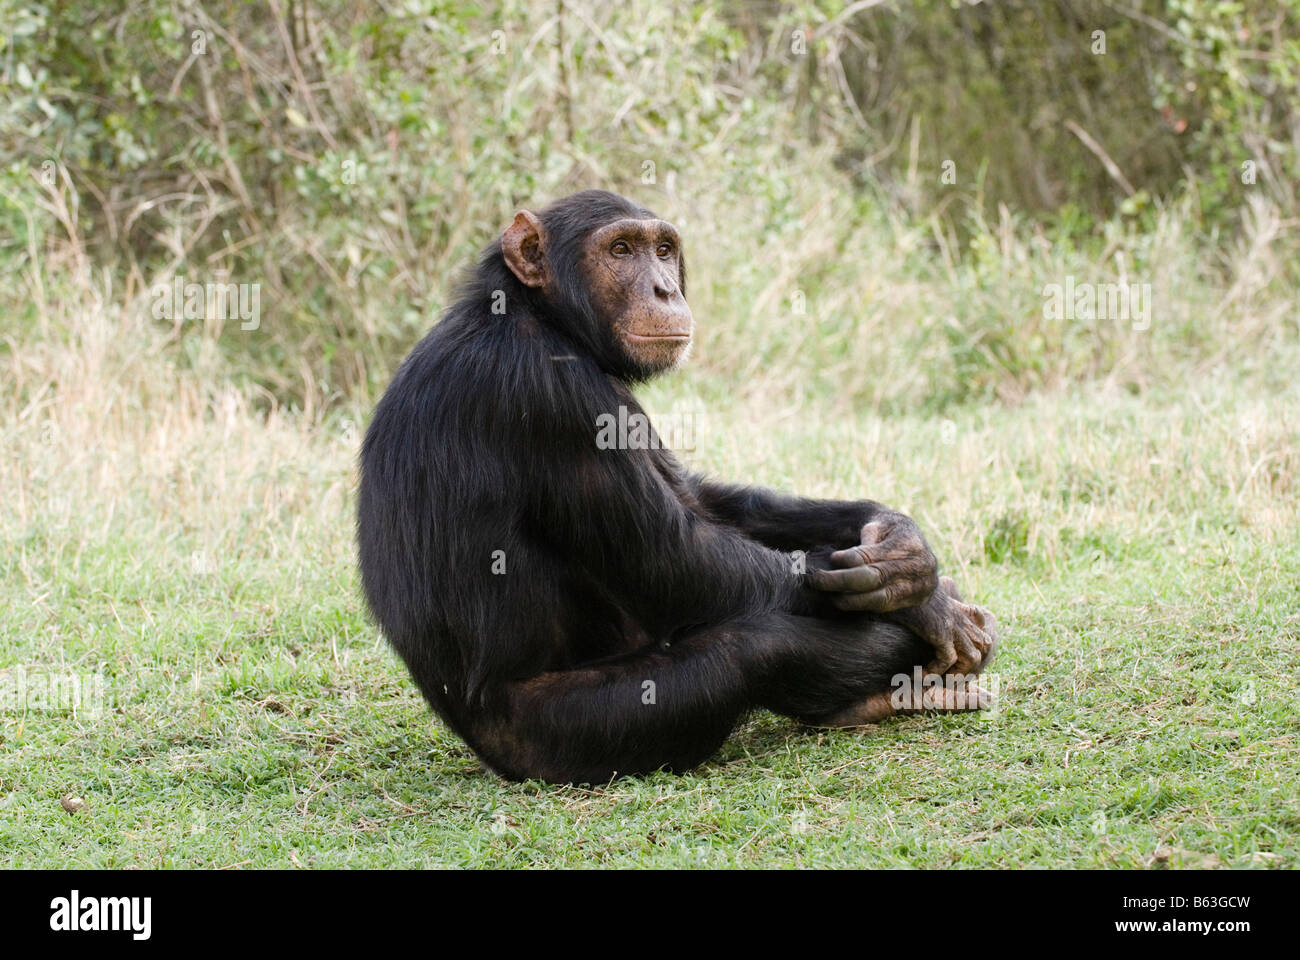 Common Chimpanzee, Pan troglodytes, Laikipia Sweetwaters Privat RESERVE KENYA Africa Stock Photo